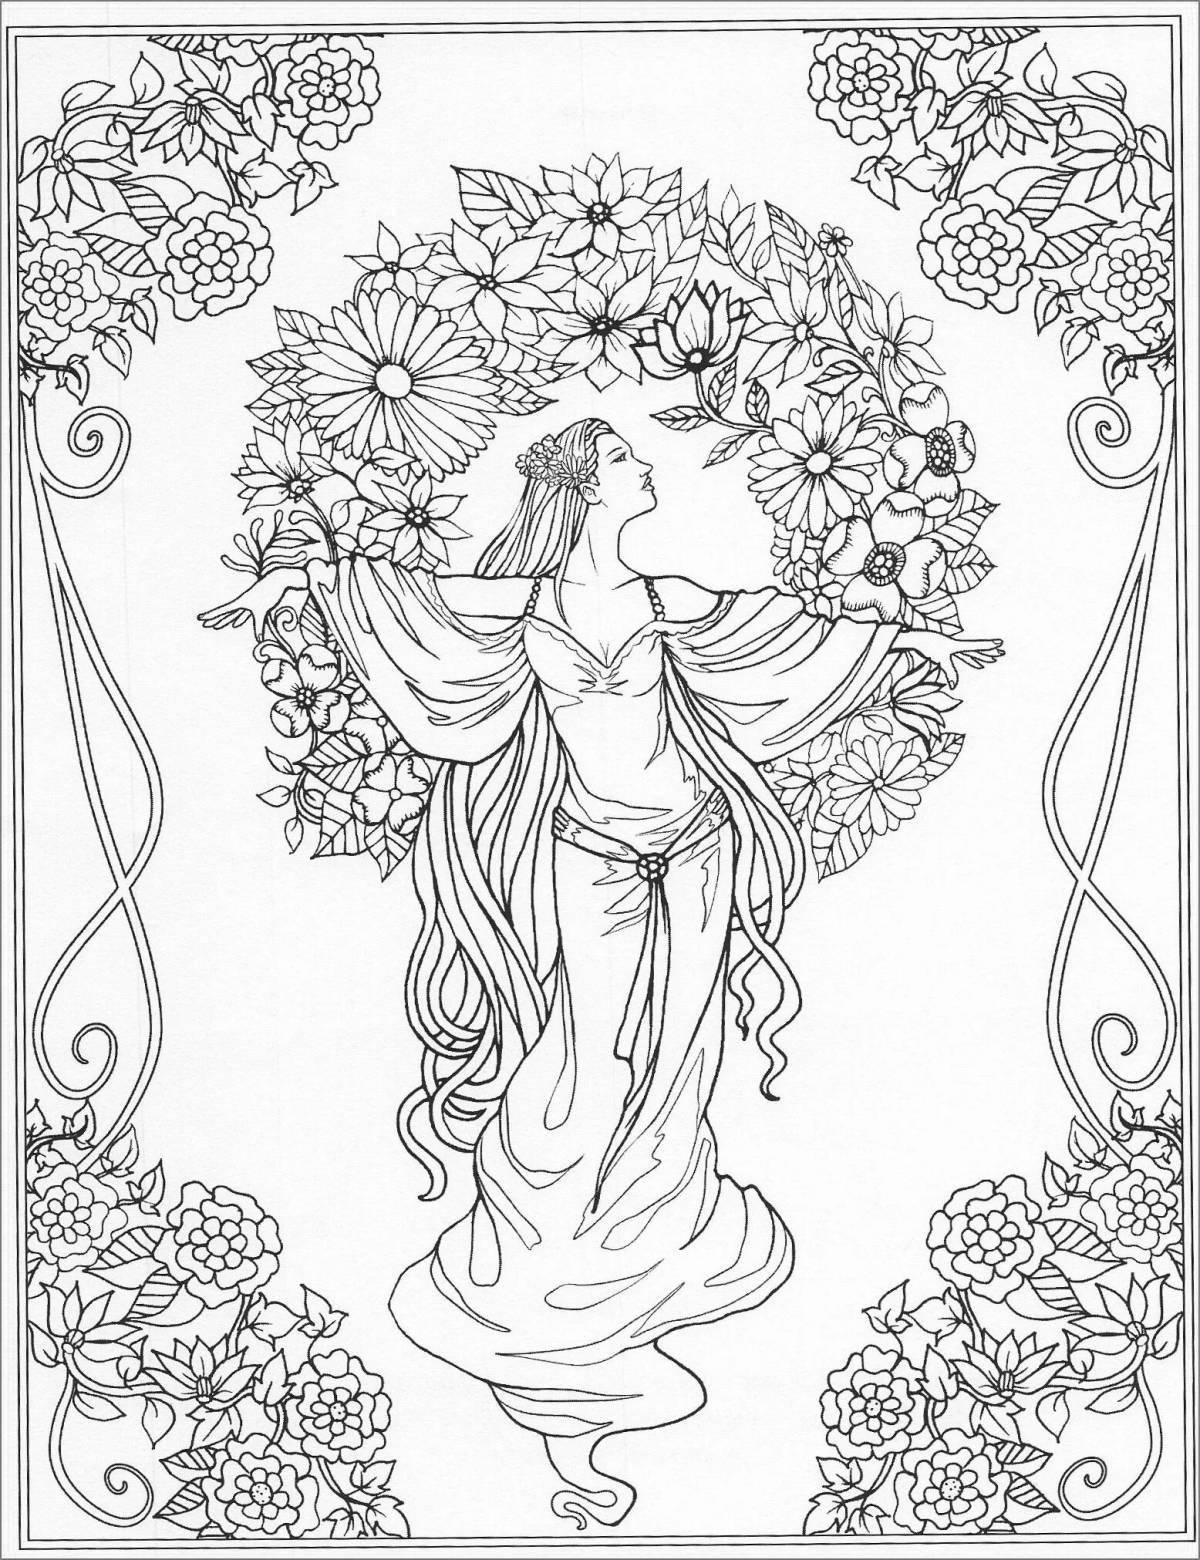 Glorious aphrodite goddess coloring page